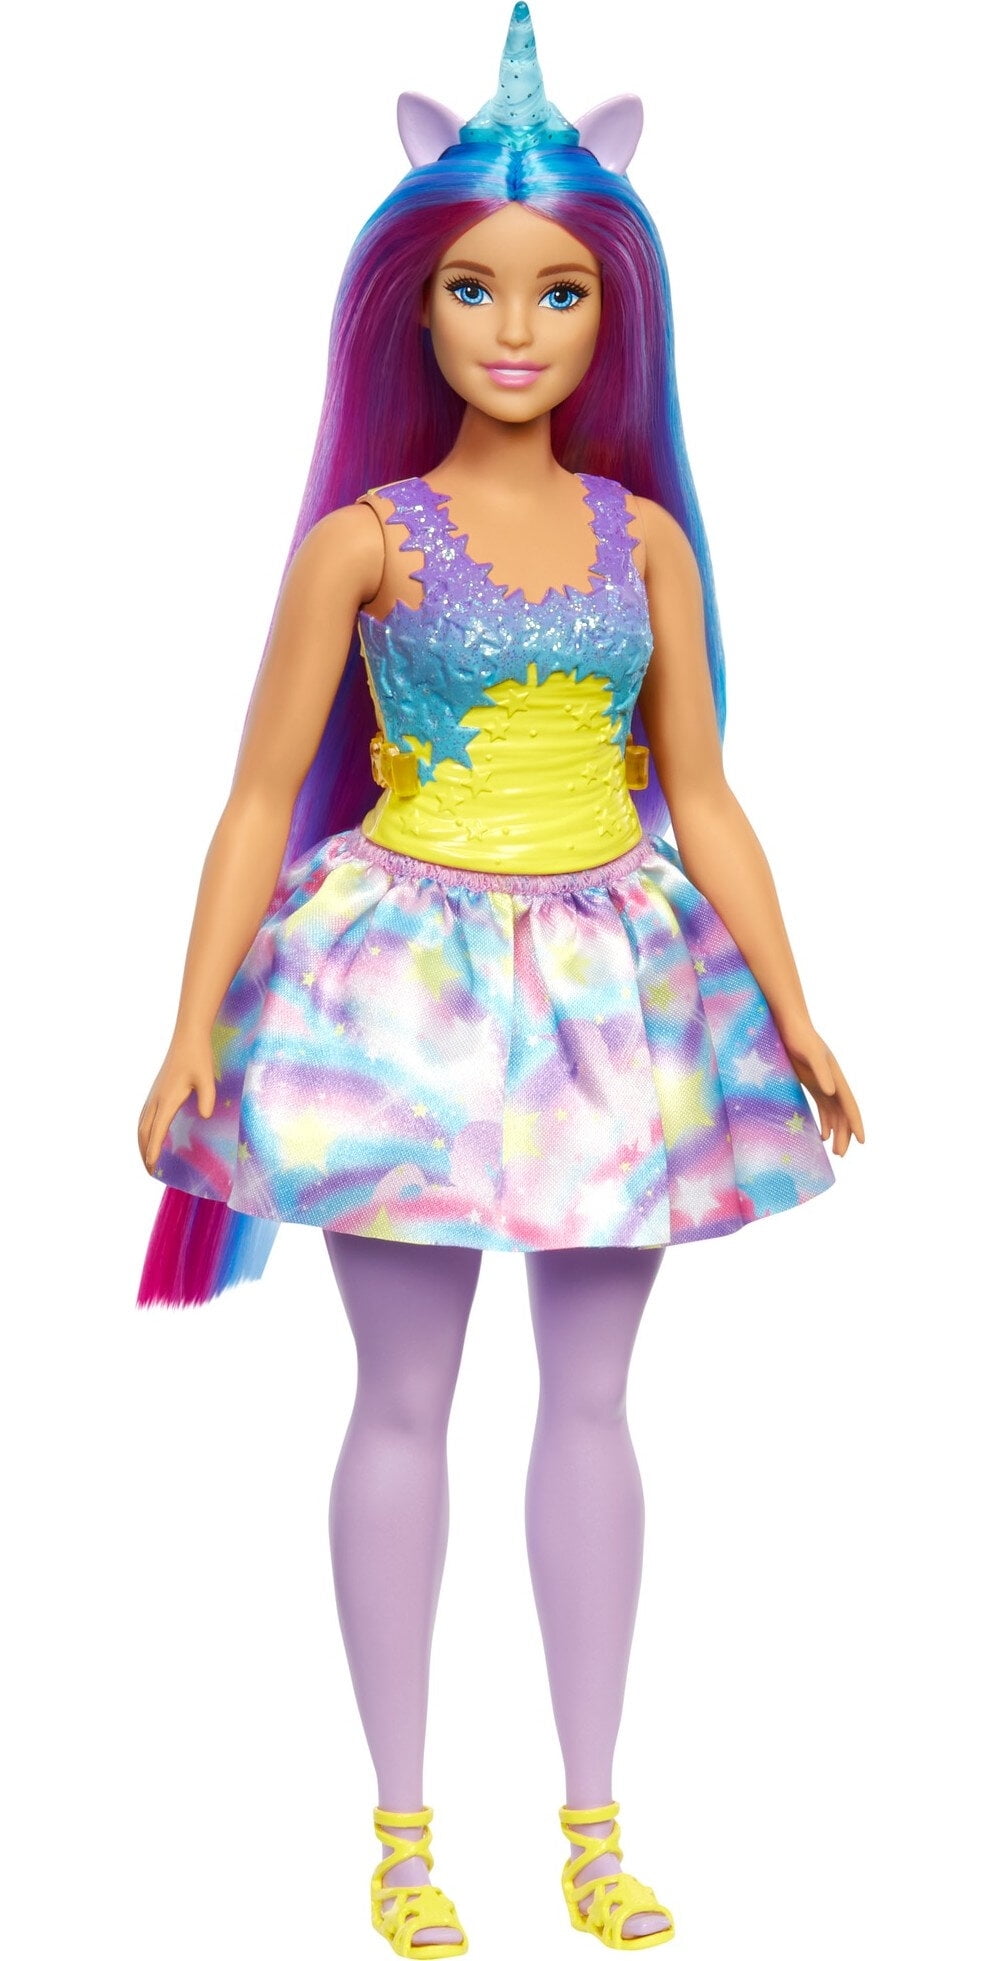 Barbie Dreamtopia Unicorn Doll with Headband & Tail, Purple Hair & Rainbow Skirt